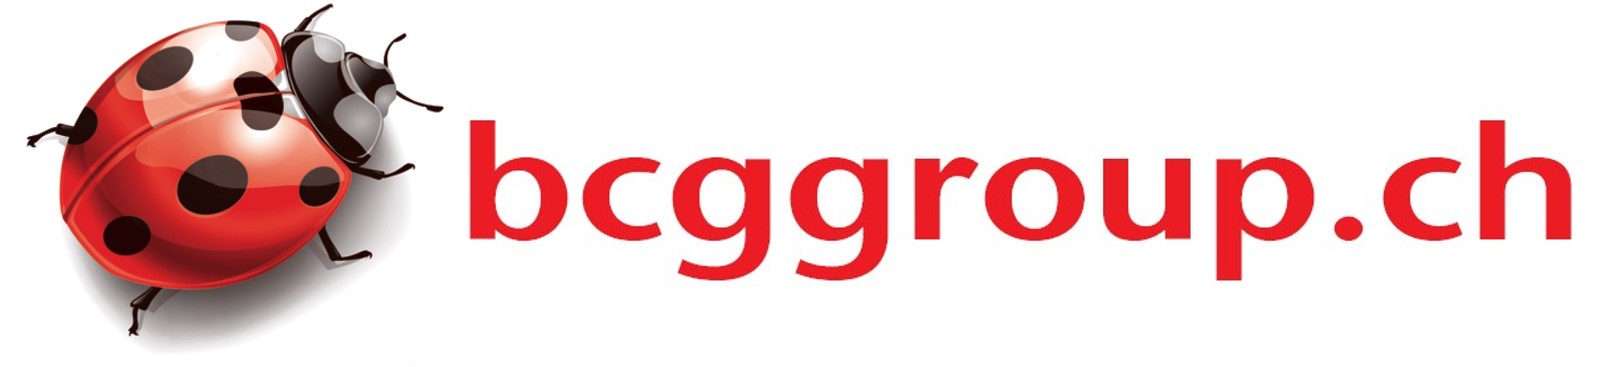 Bcggroup.ch